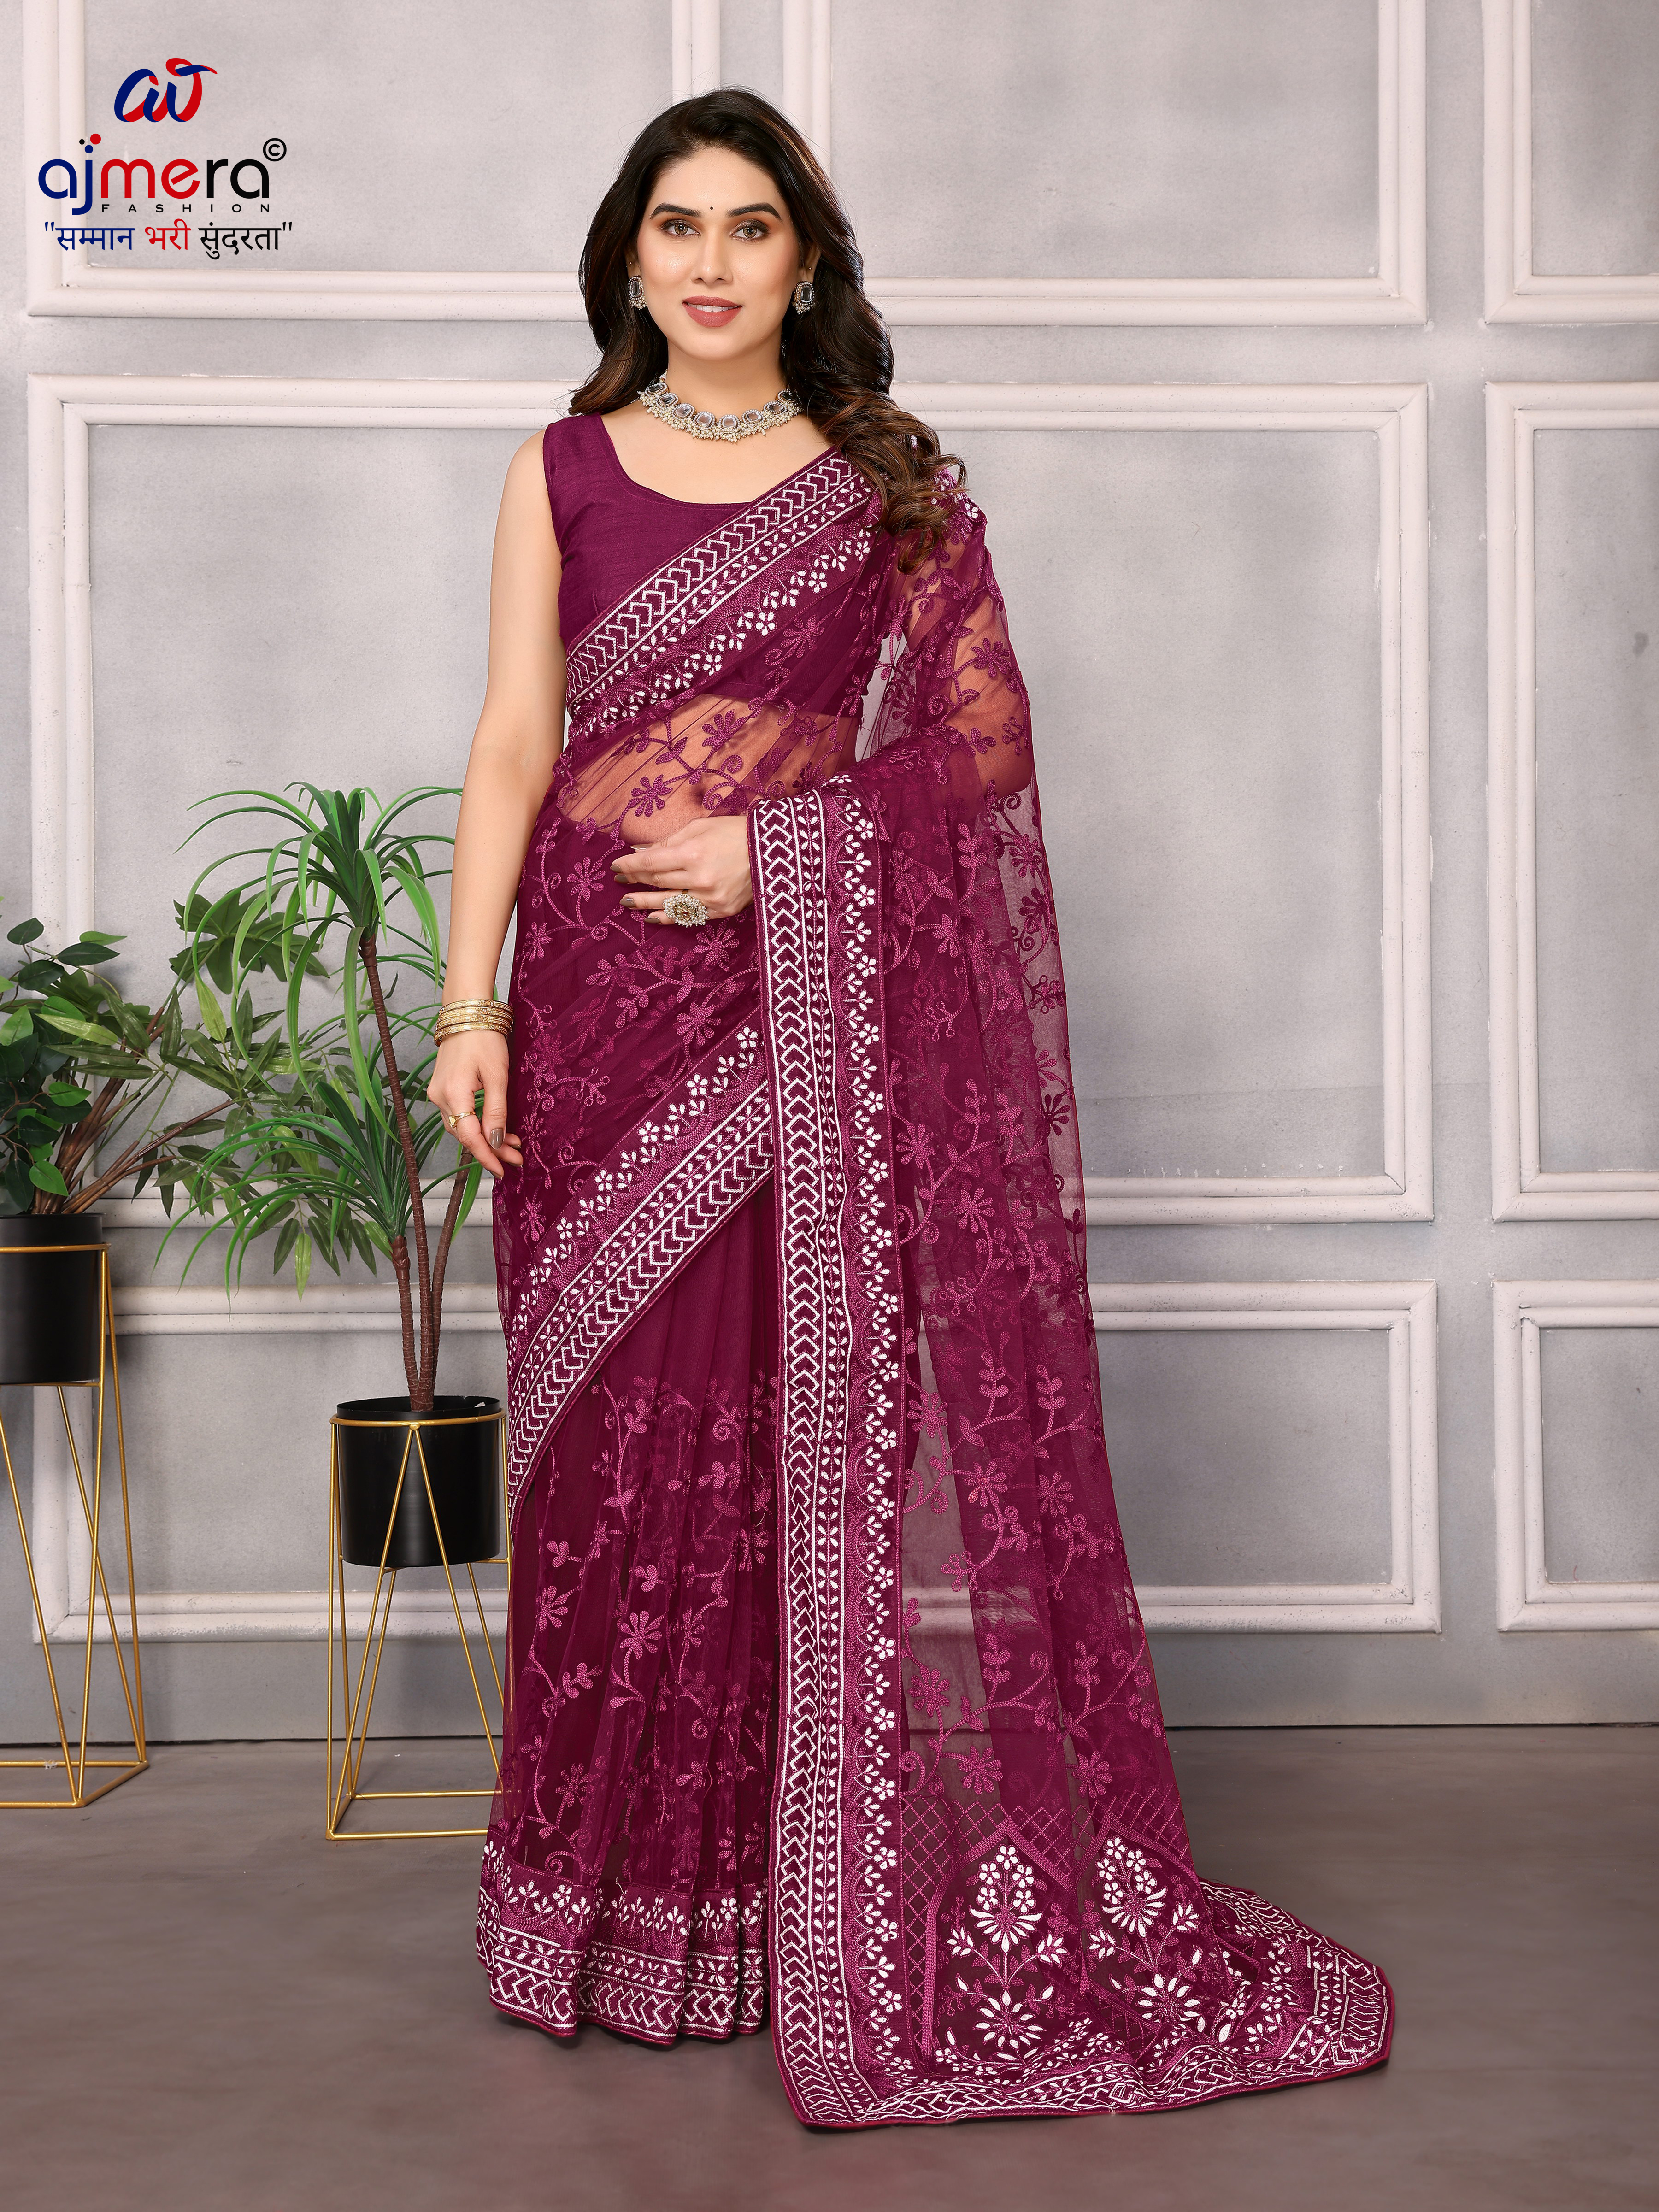 Attractive Look Saree in Fine Colored Manufacturers, Suppliers in Gurugram